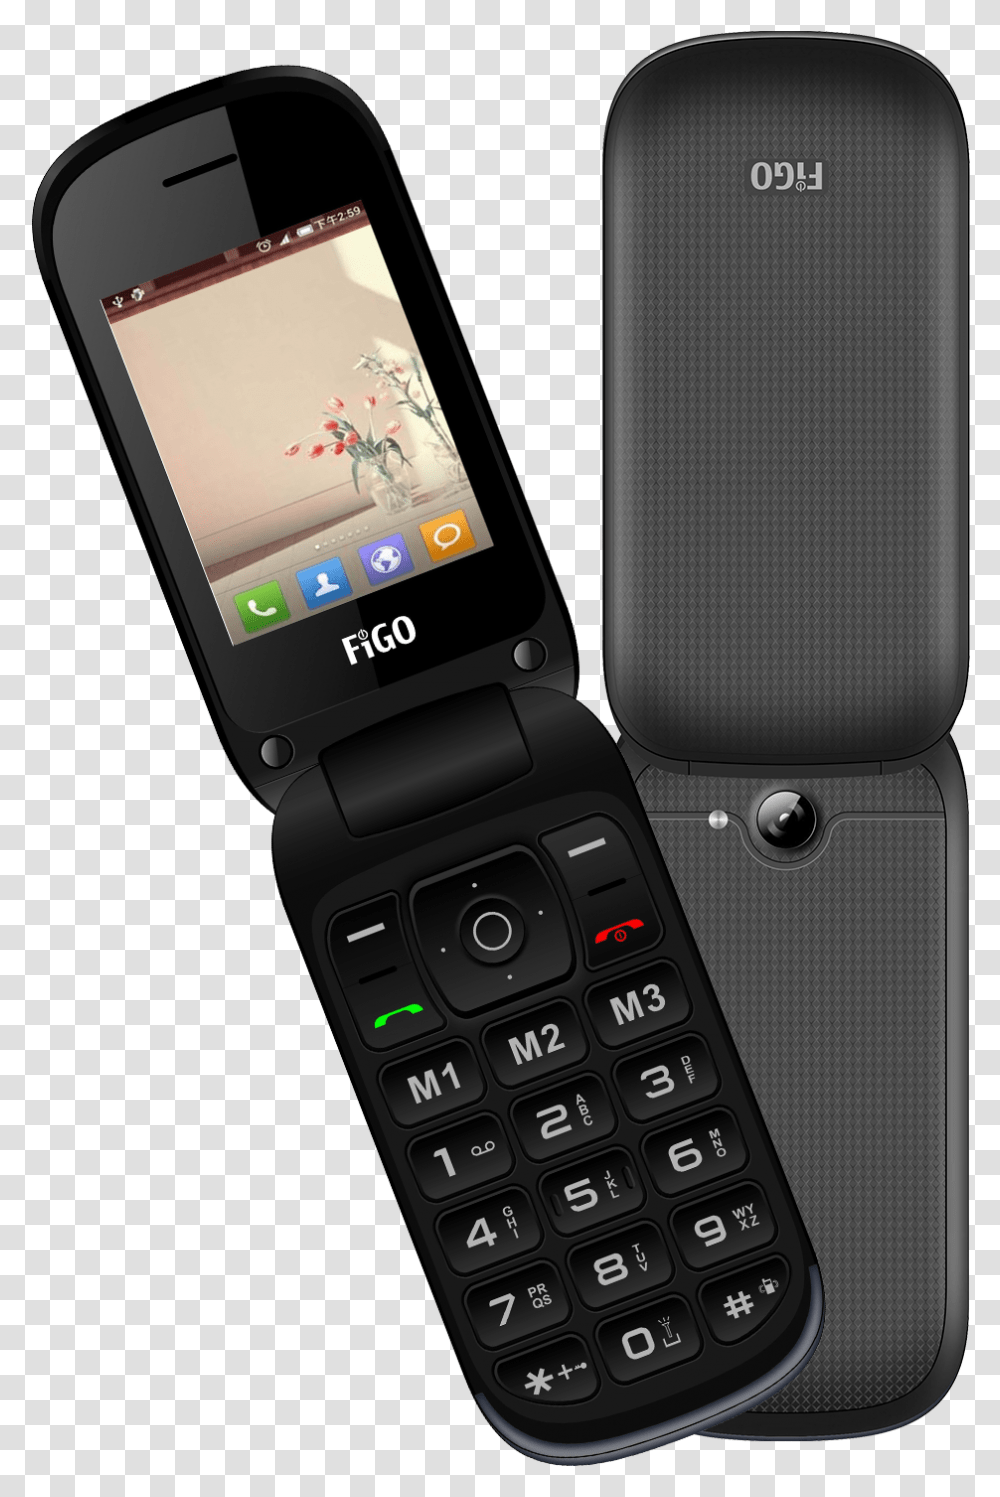 Figo Fury Flip Phone Hd Download Figo Phone, Mobile Phone, Electronics, Cell Phone, Iphone Transparent Png